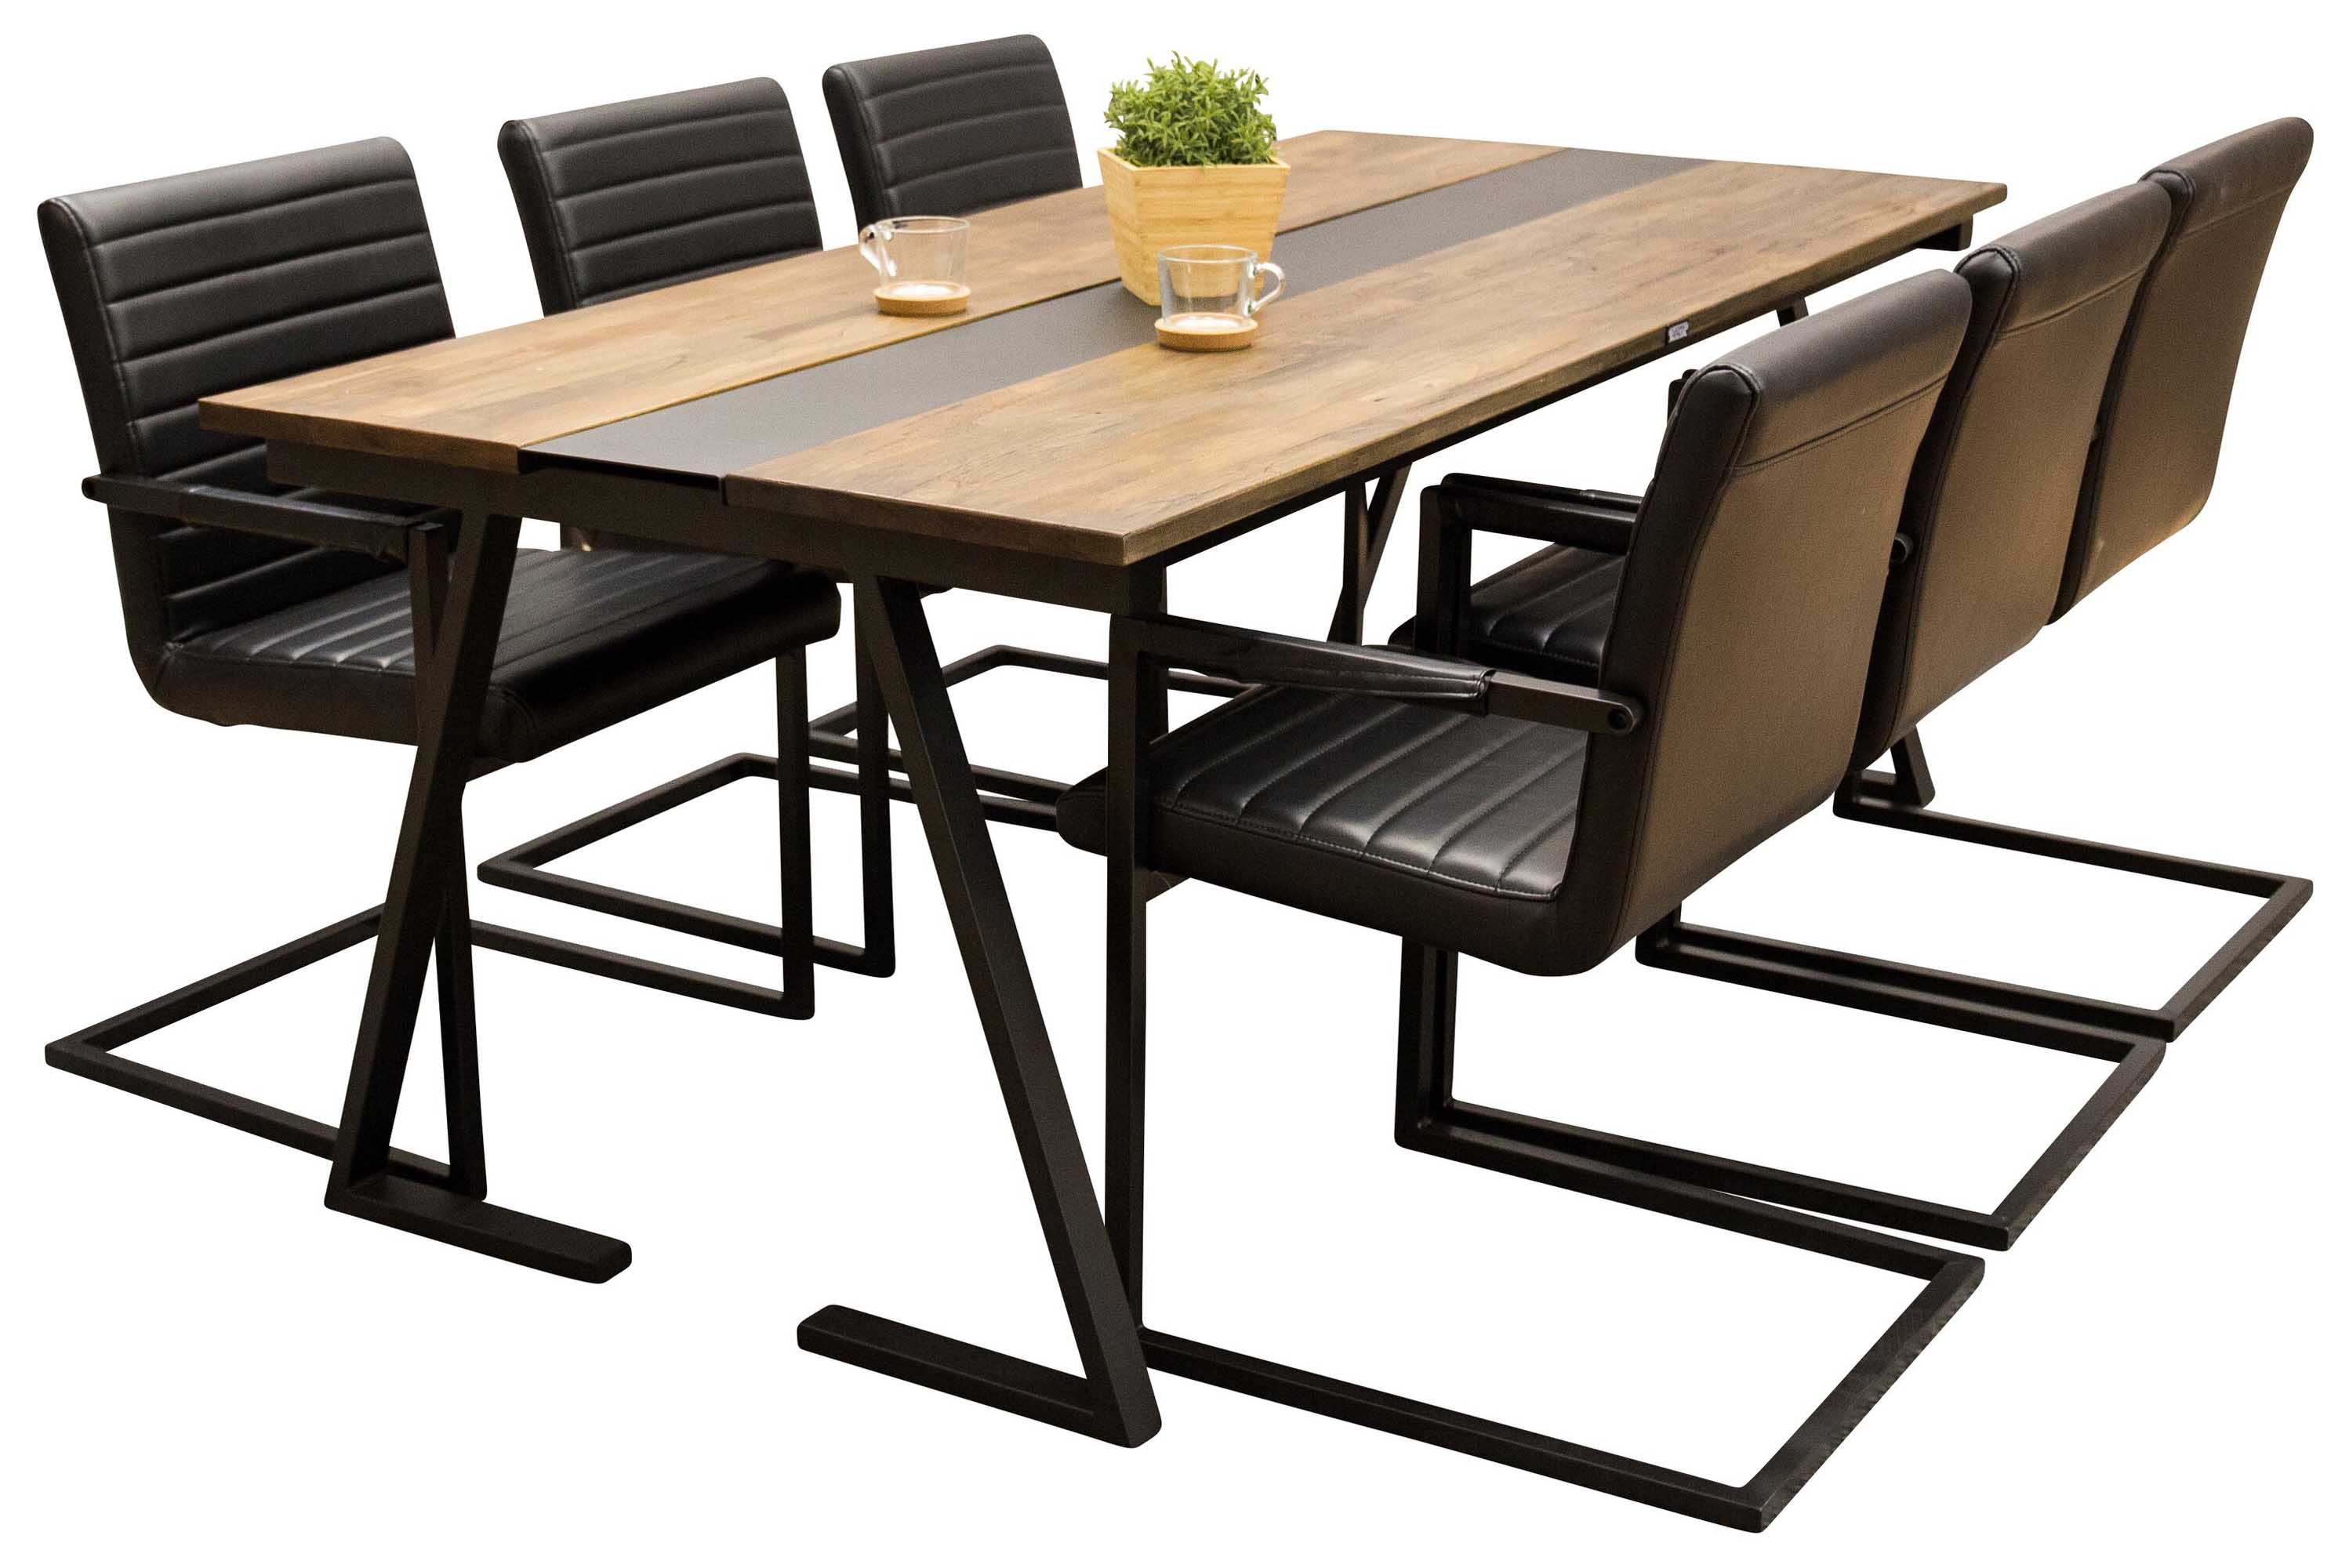 Venture Design Jakarta & Art spisebordssæt Natur/sort 6 st stole & borde 200 x 90 cm